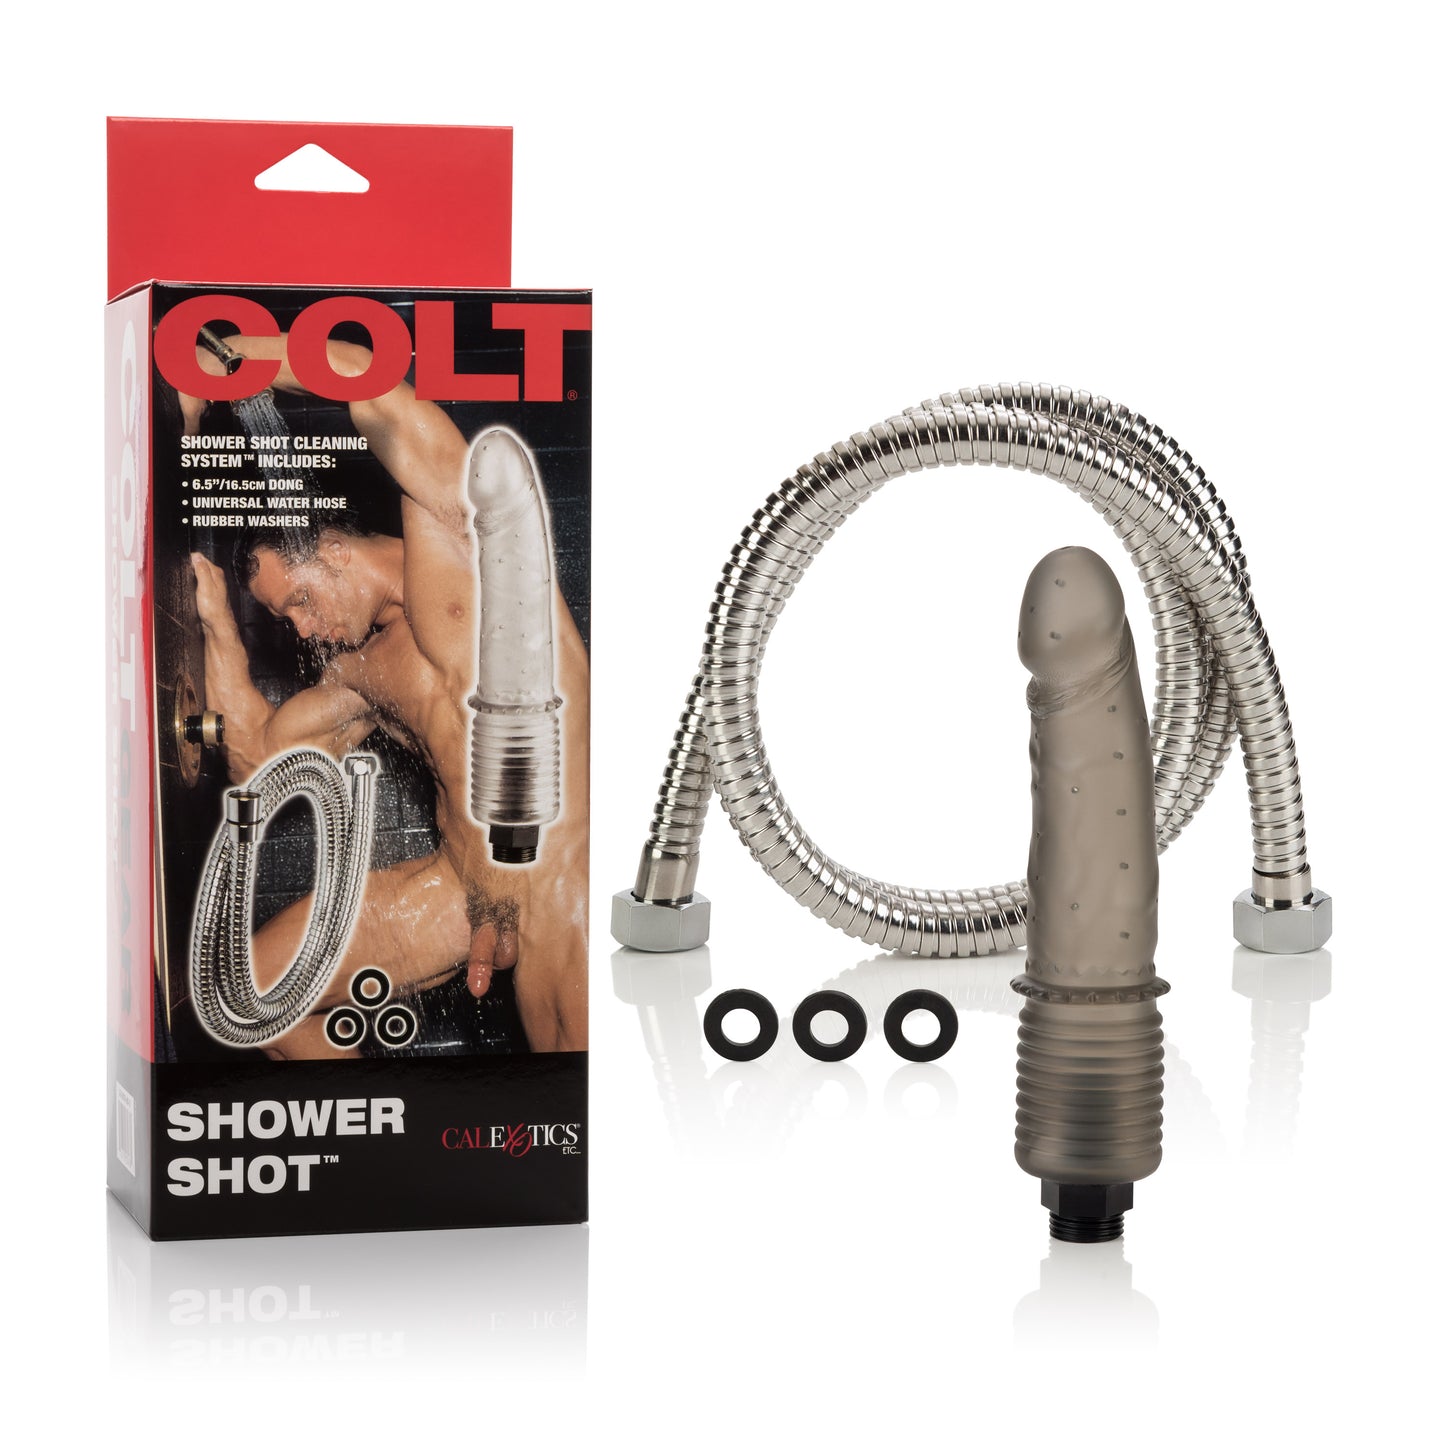 COLT Shower Shot Water Dildo